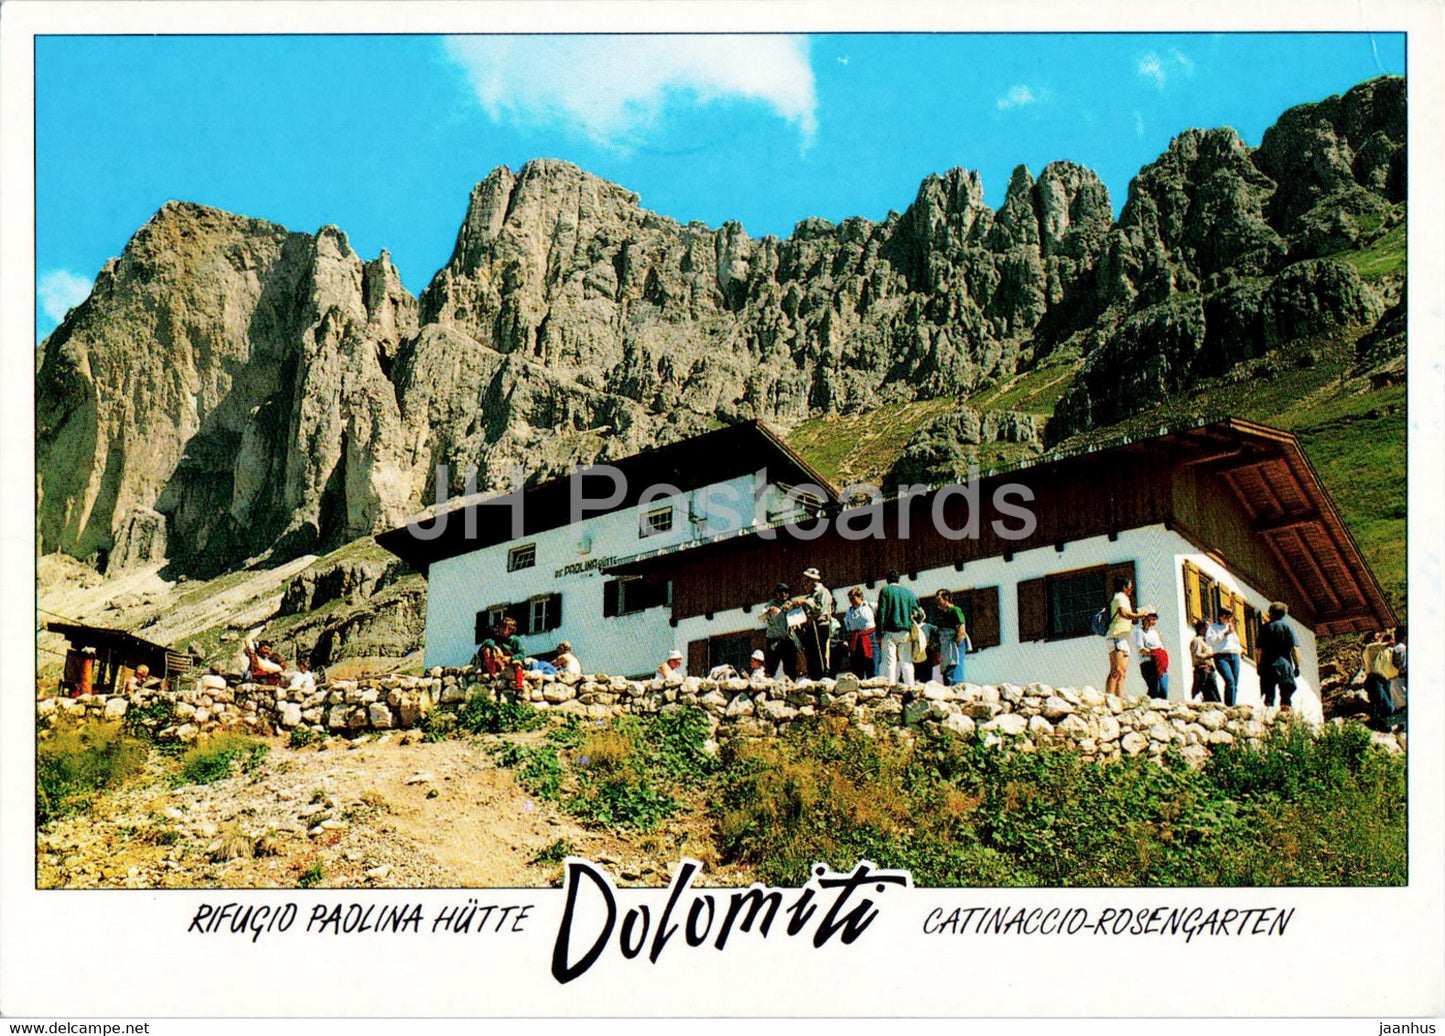 Dolomiti - Rifugio Paolina Hutte - Catinaccio - Rosengarten - Italy - unused - JH Postcards